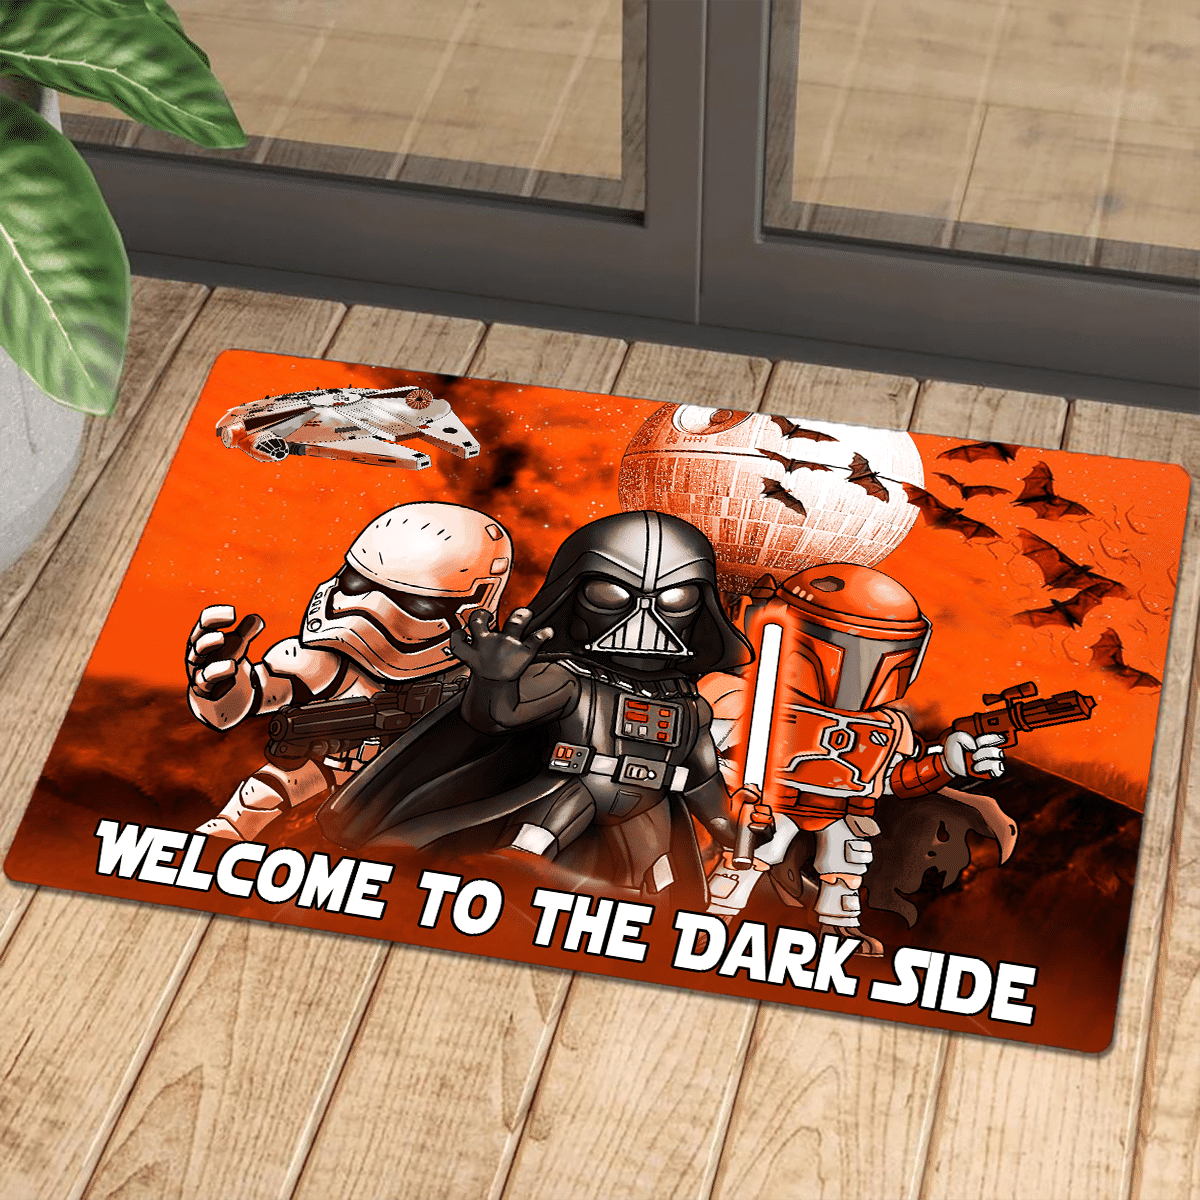 Star Wars Darth Vader Stormtrooper Boba Fett Welcome to the dark side doormart 3